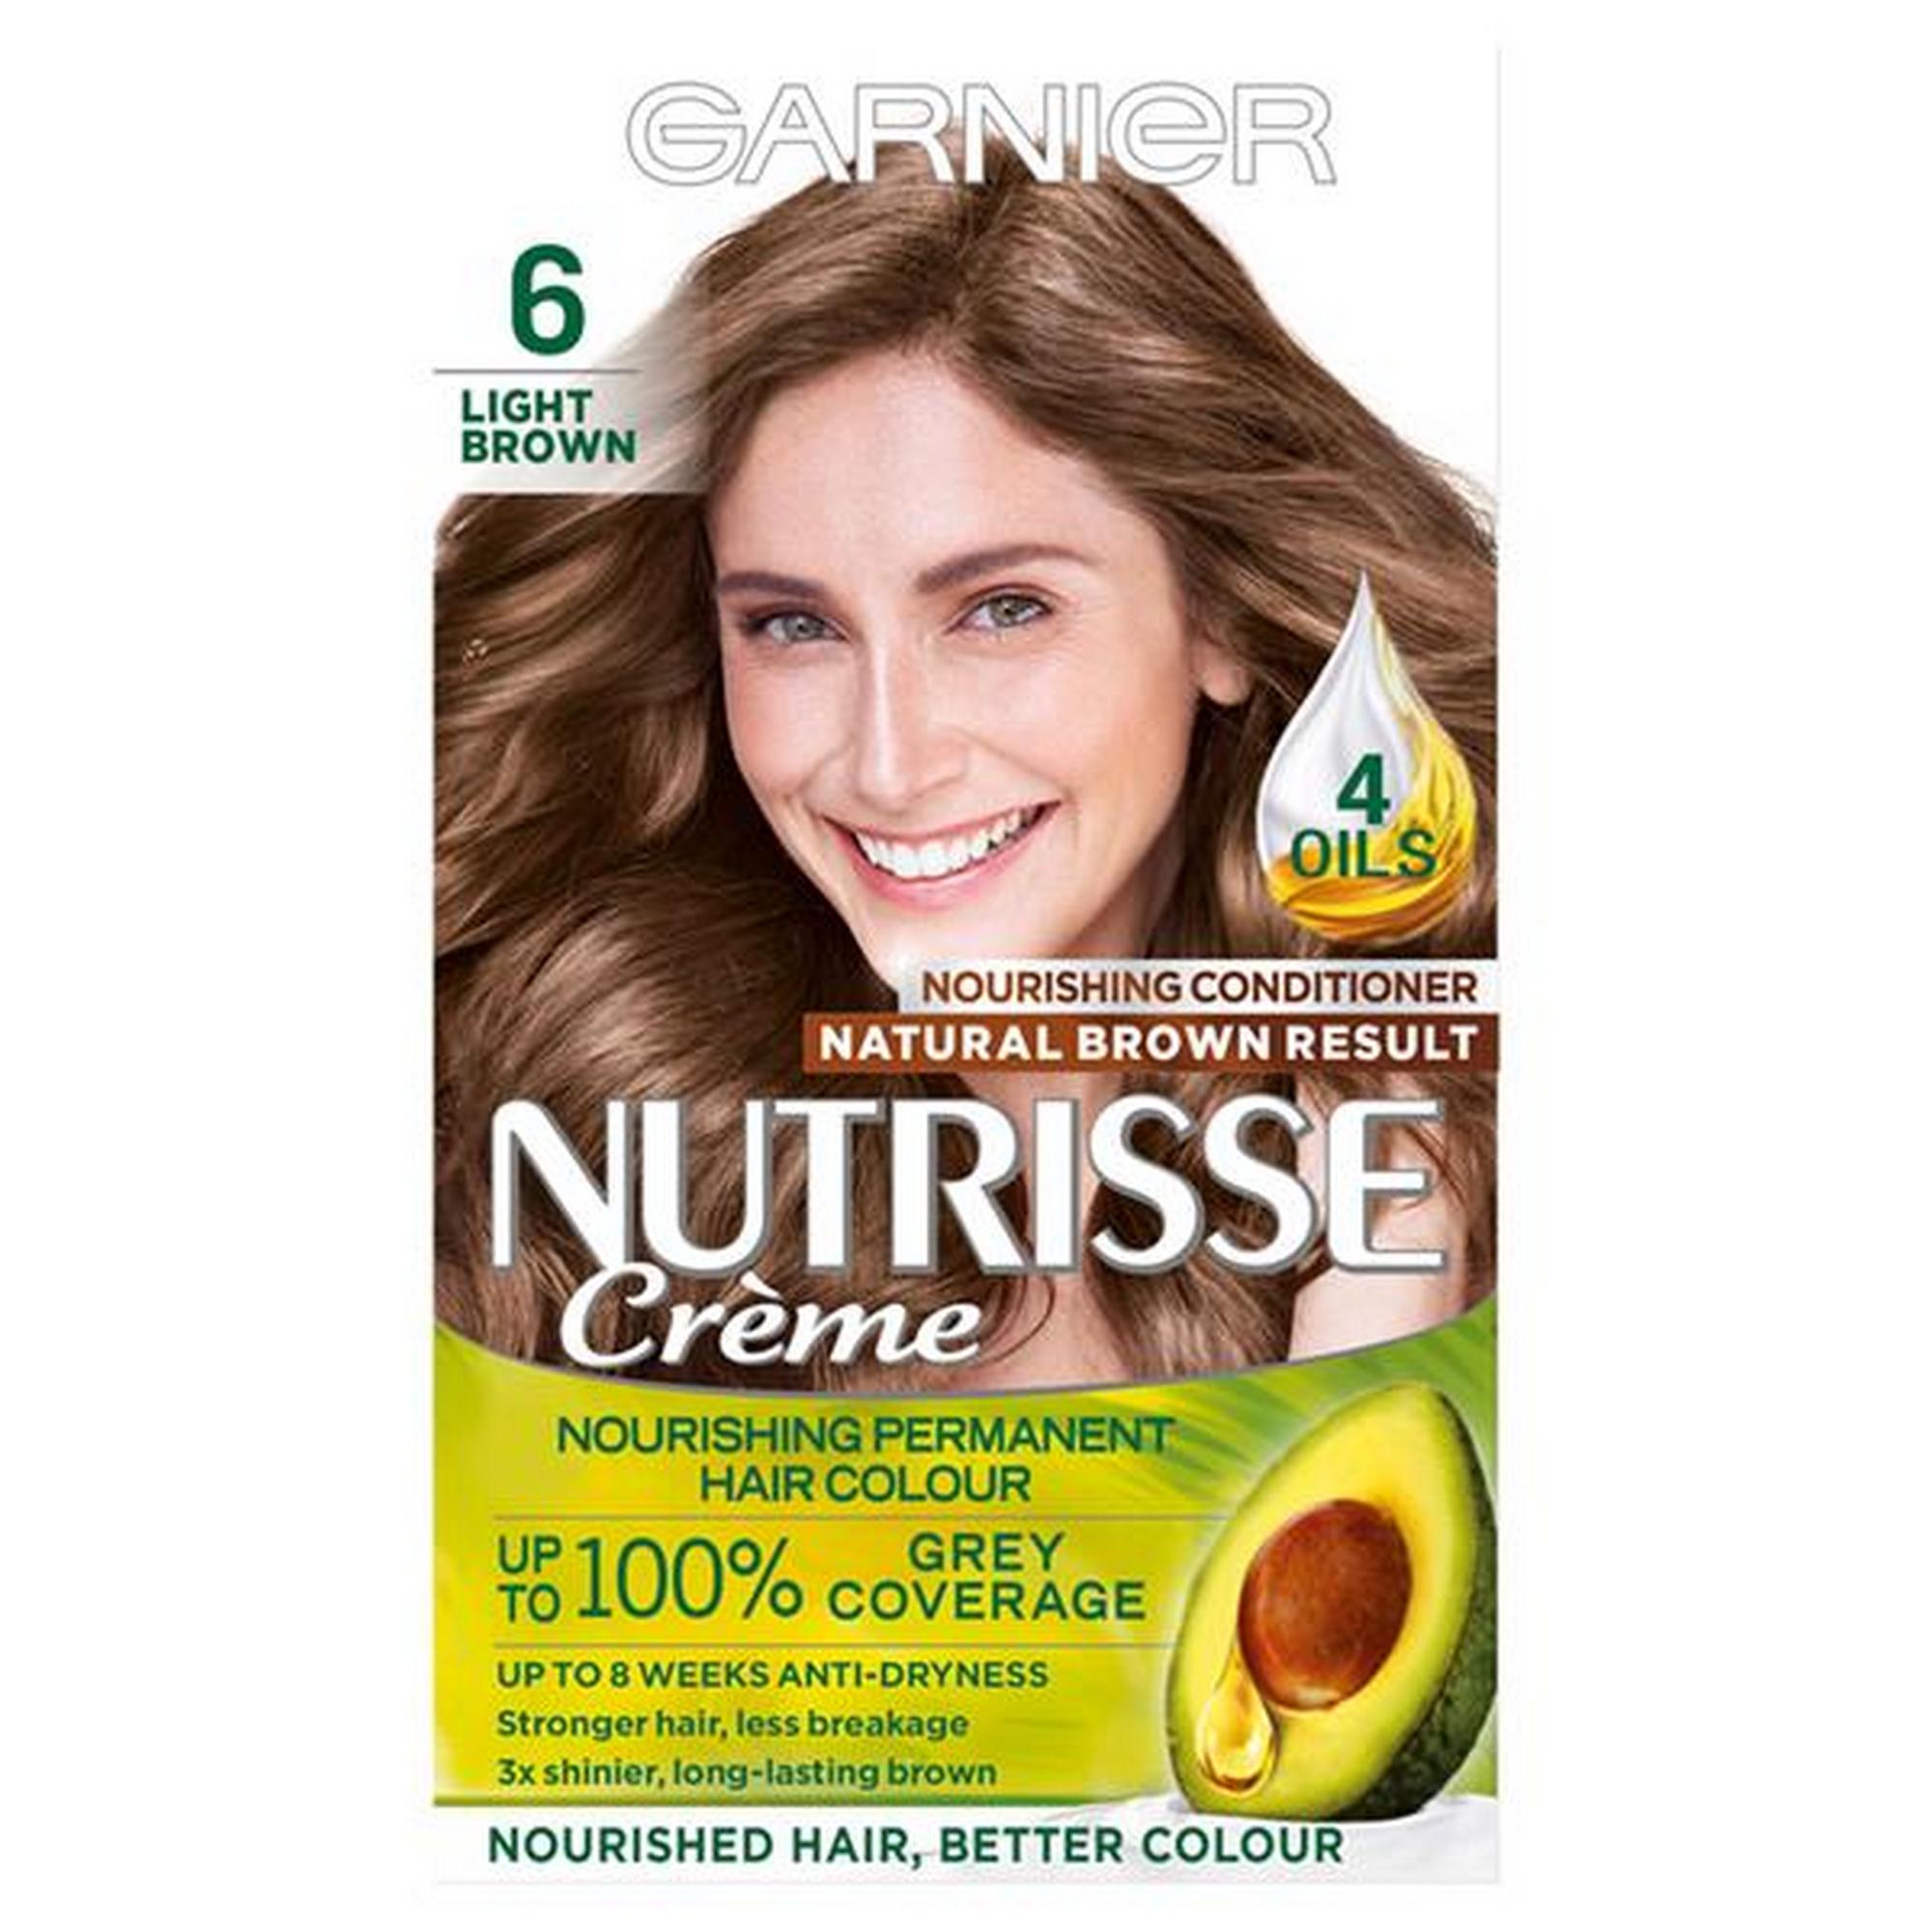 Garnier Nutrisse Ultra Crème Permanent Hair Dye Light Brown